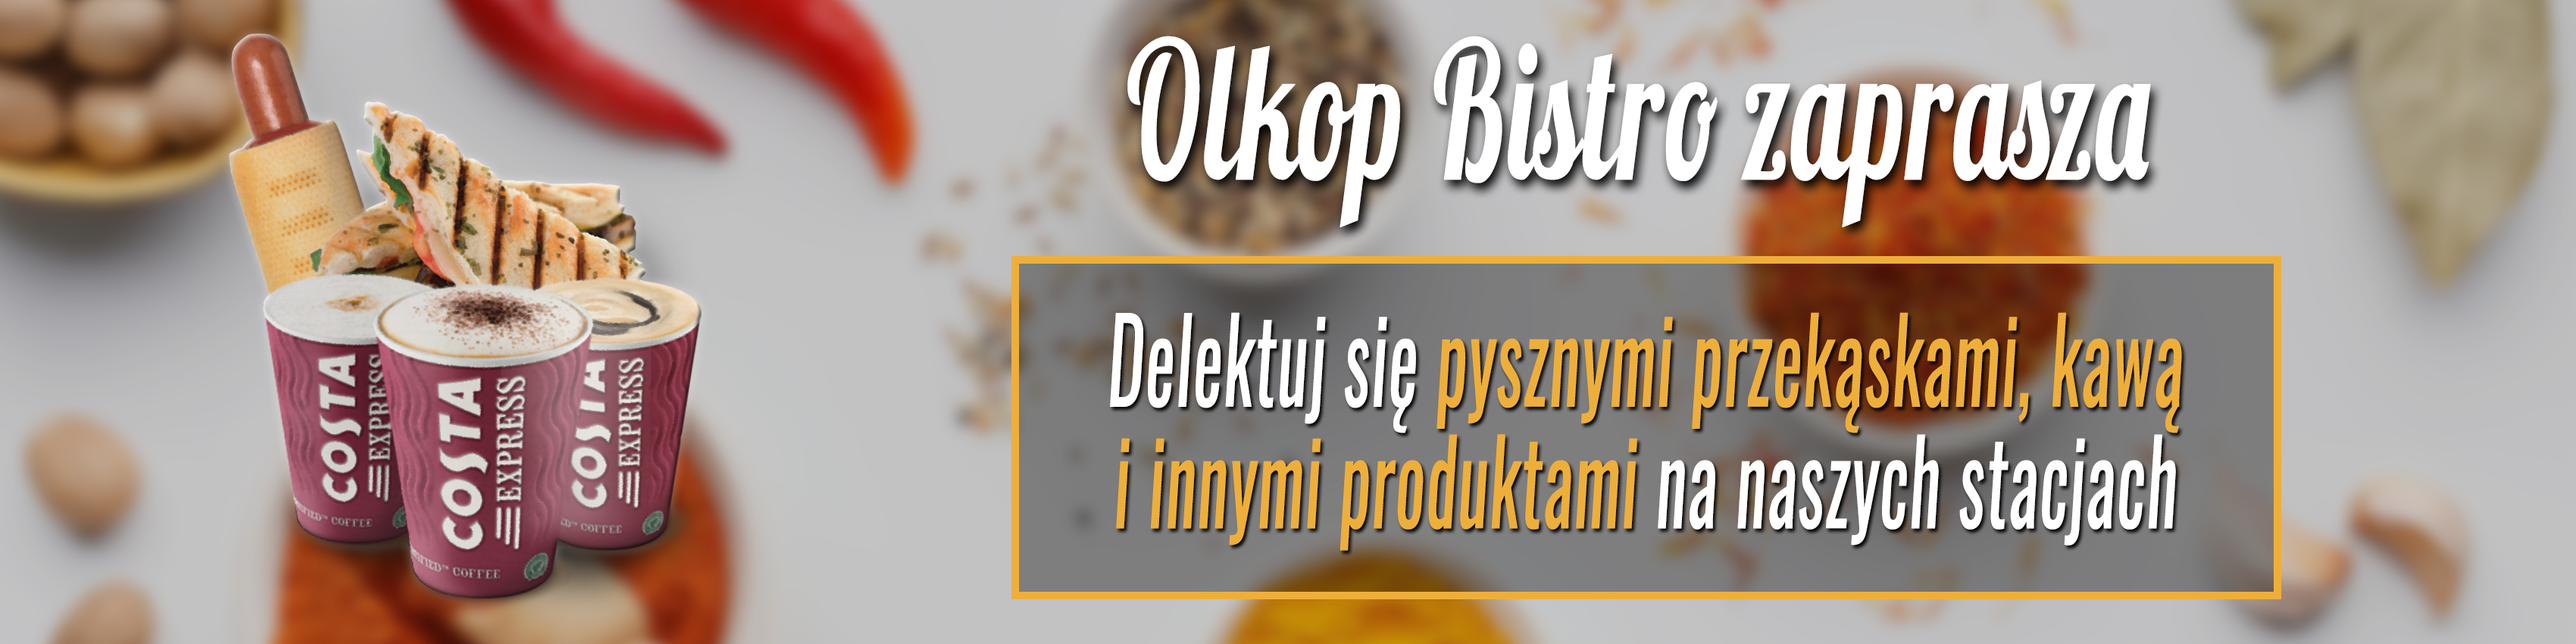 Olkop Bistro - oferta na stacjach